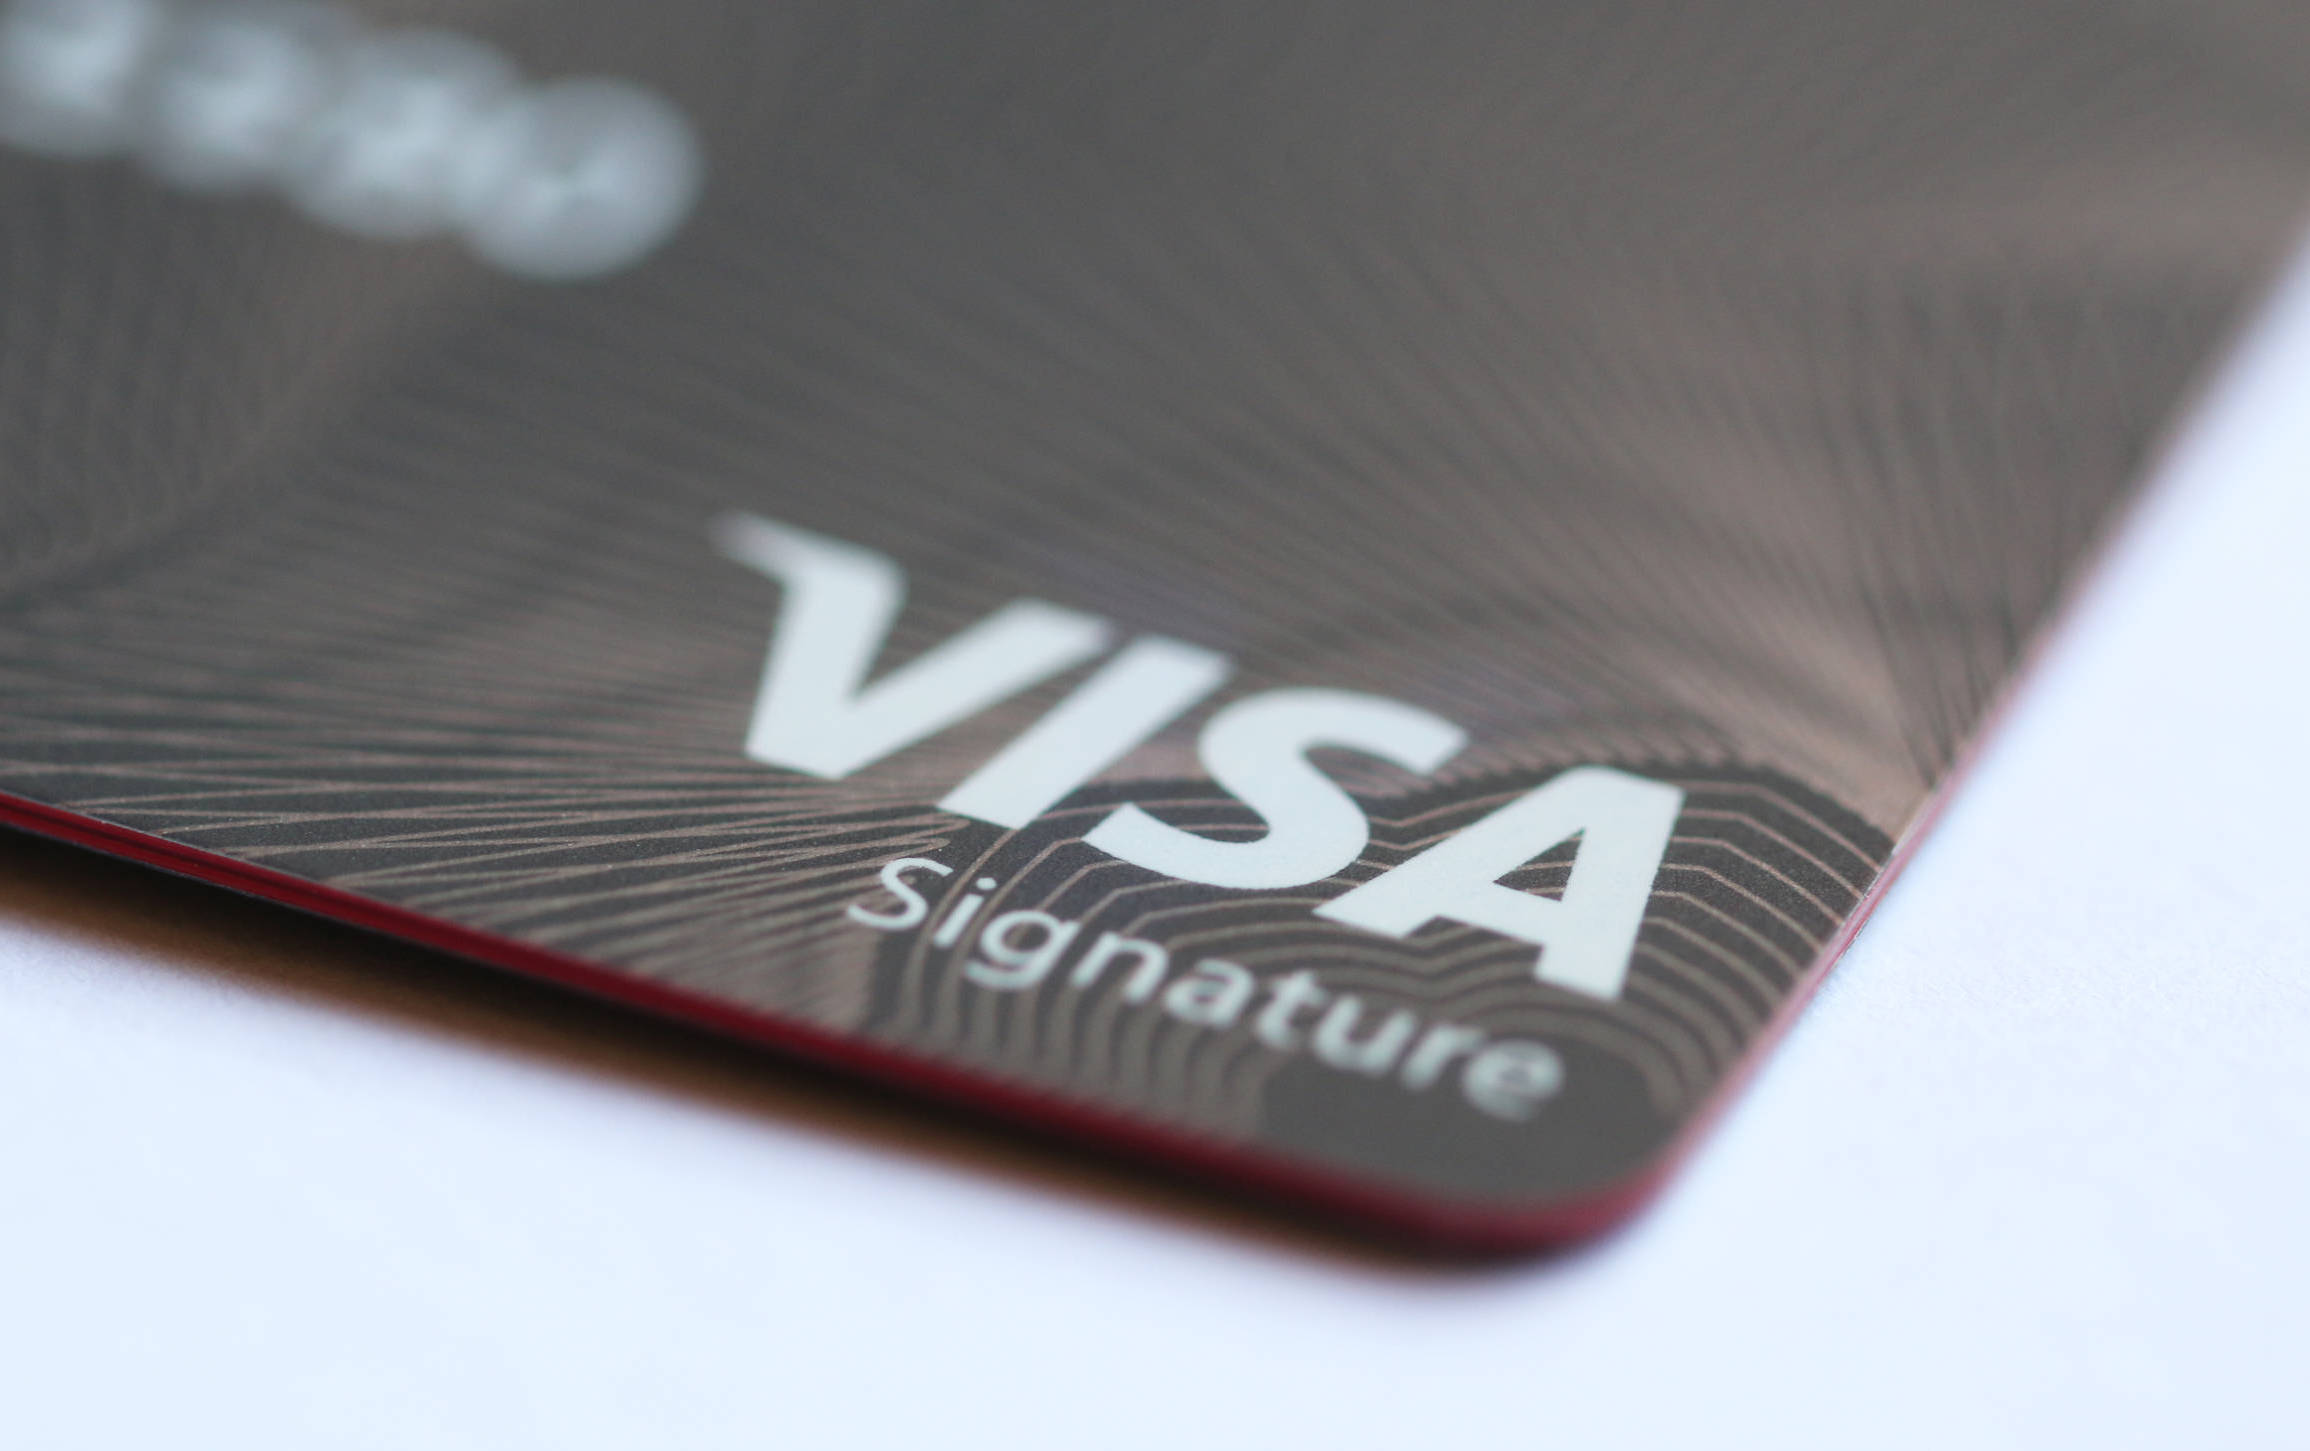 costco visa signature card travel benefits